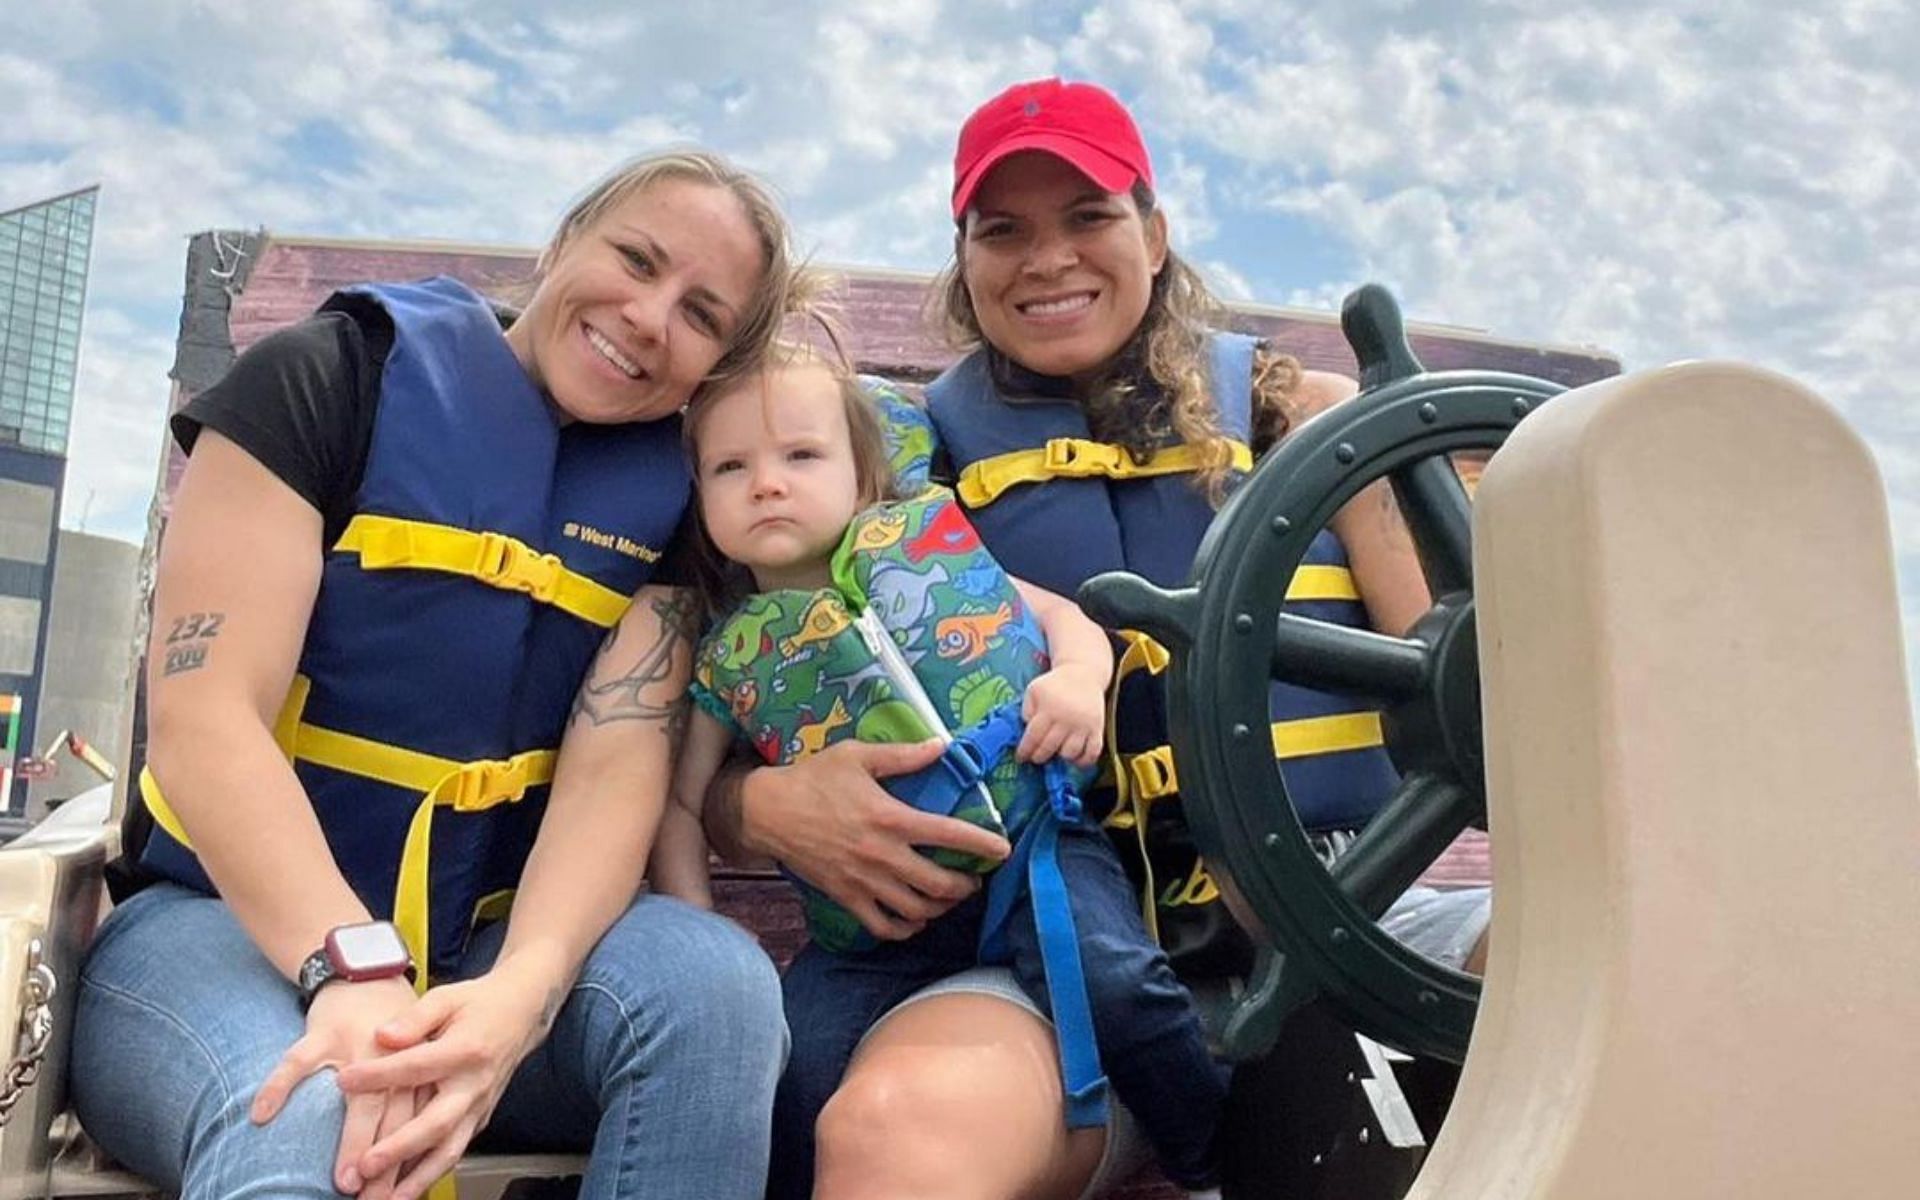 Amanda Nunes (left) and Nina Nunes (right) with their daughter (middle) (image courtesy @amanda_leoa Instagram)